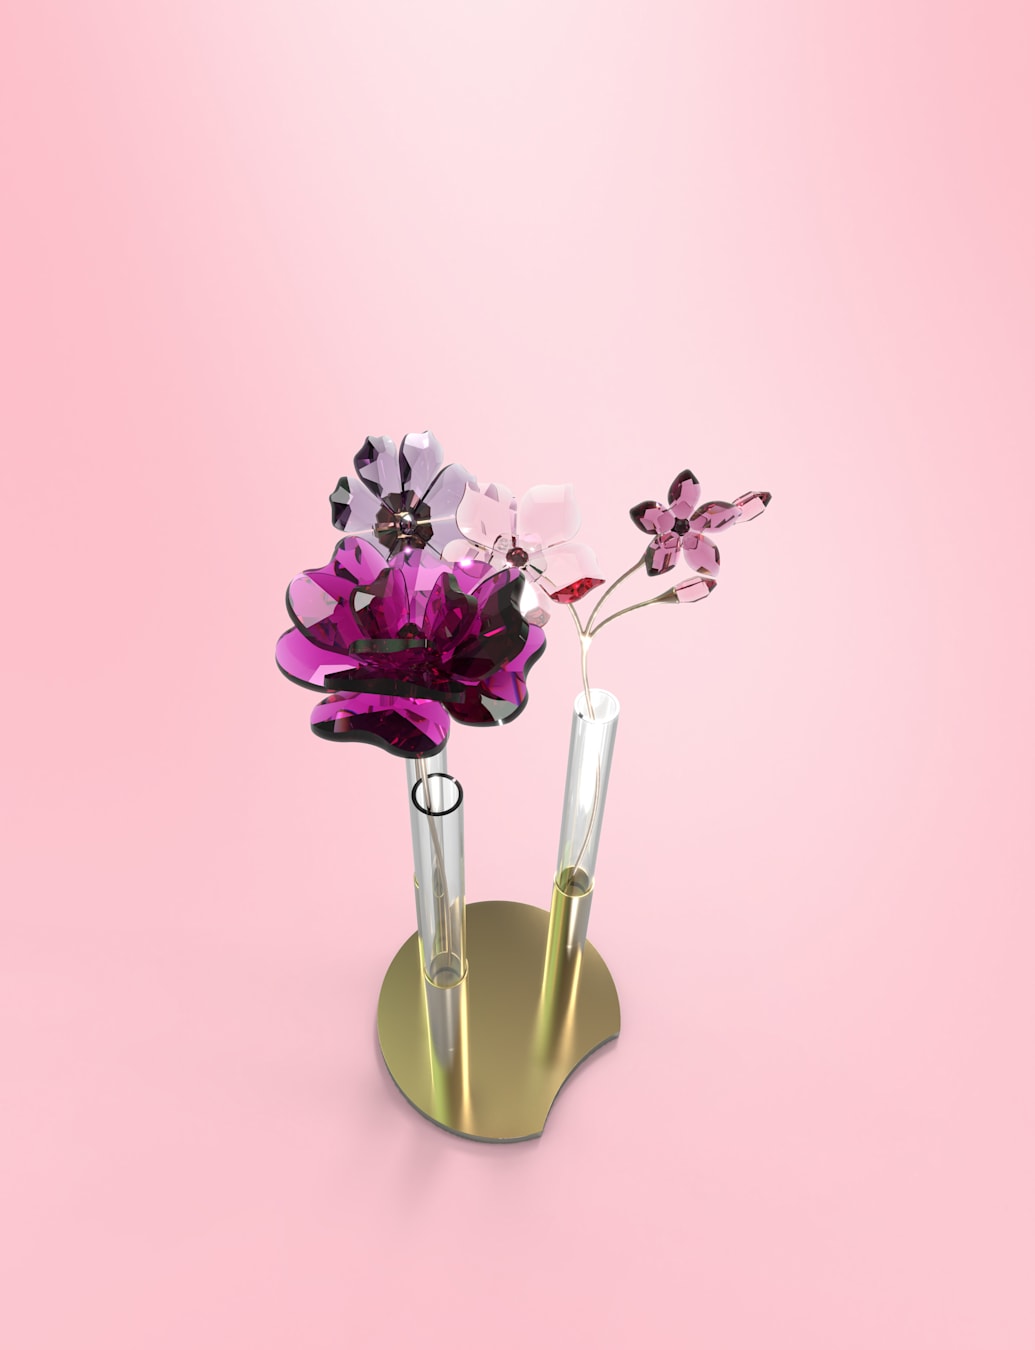 flowers | inspiration: Crystal Tales US Swarovski collection Garden